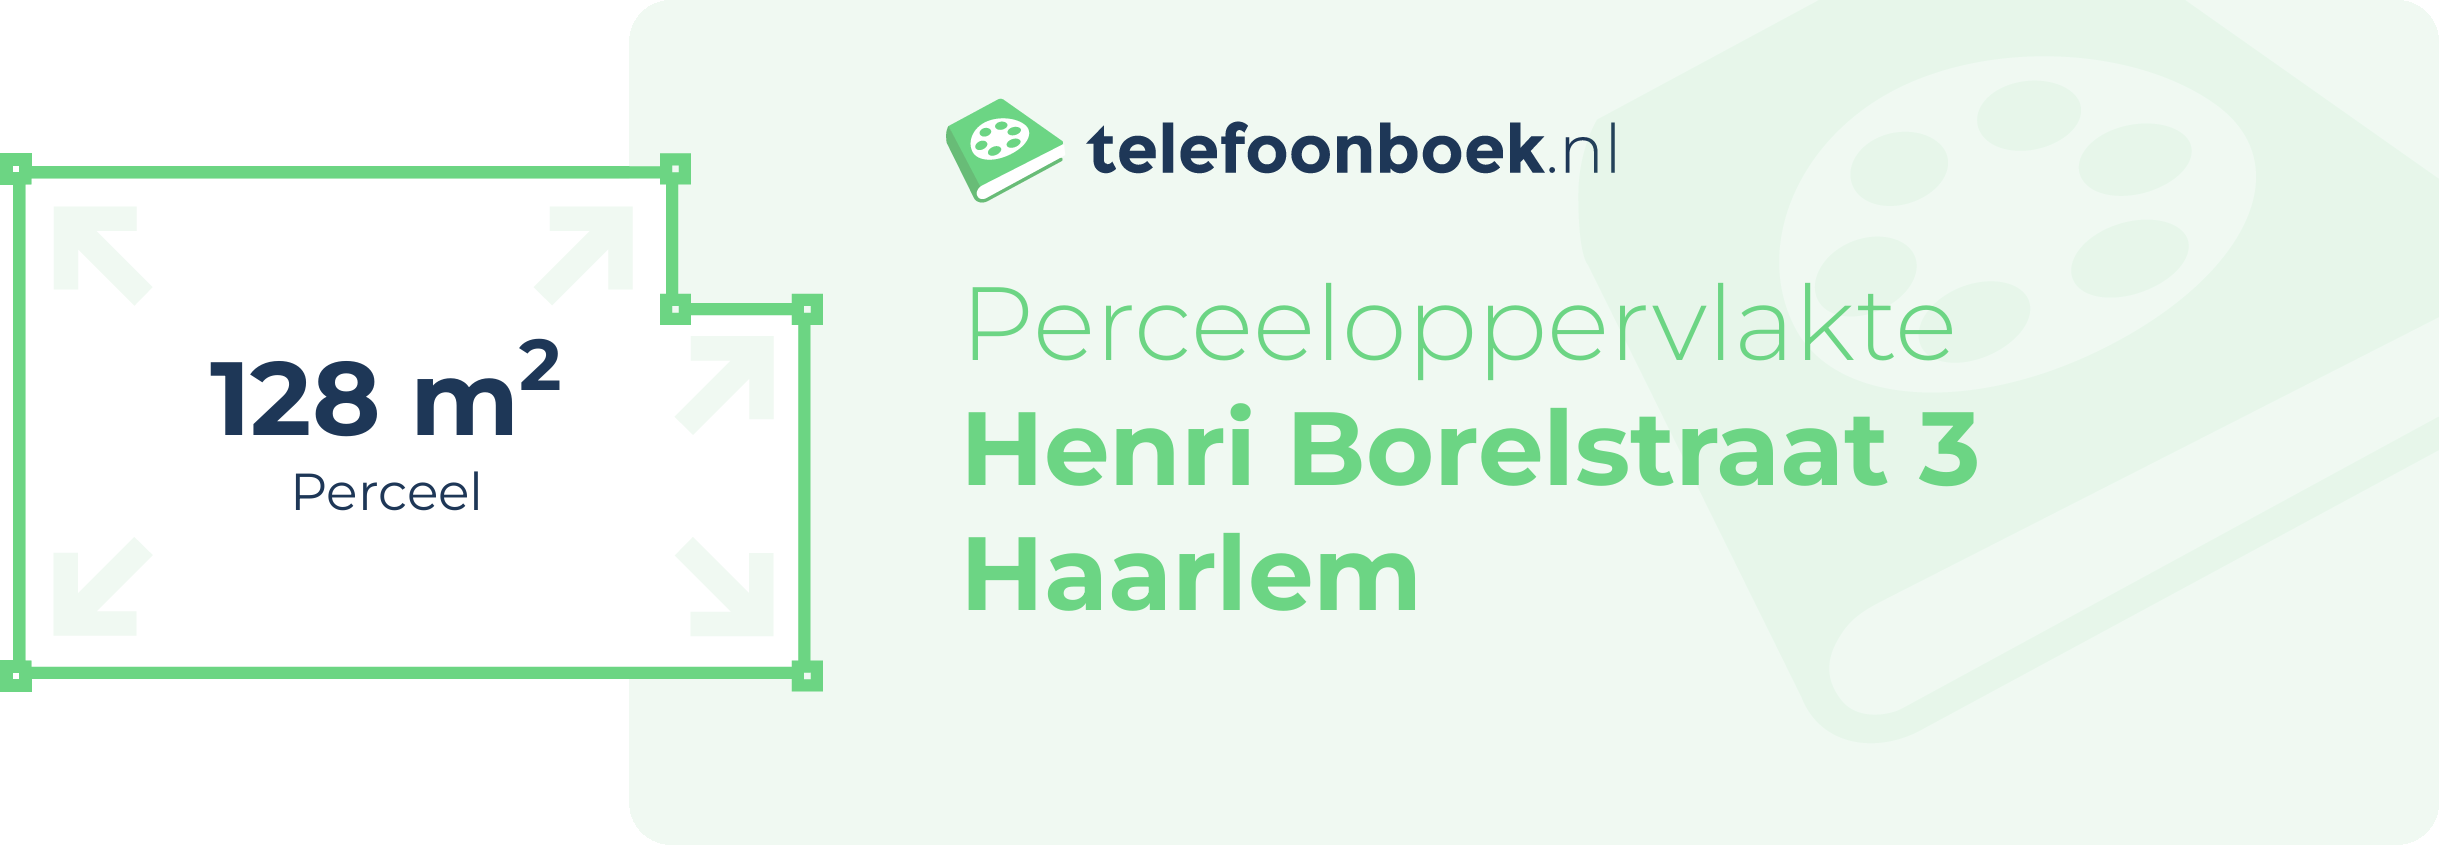 Perceeloppervlakte Henri Borelstraat 3 Haarlem